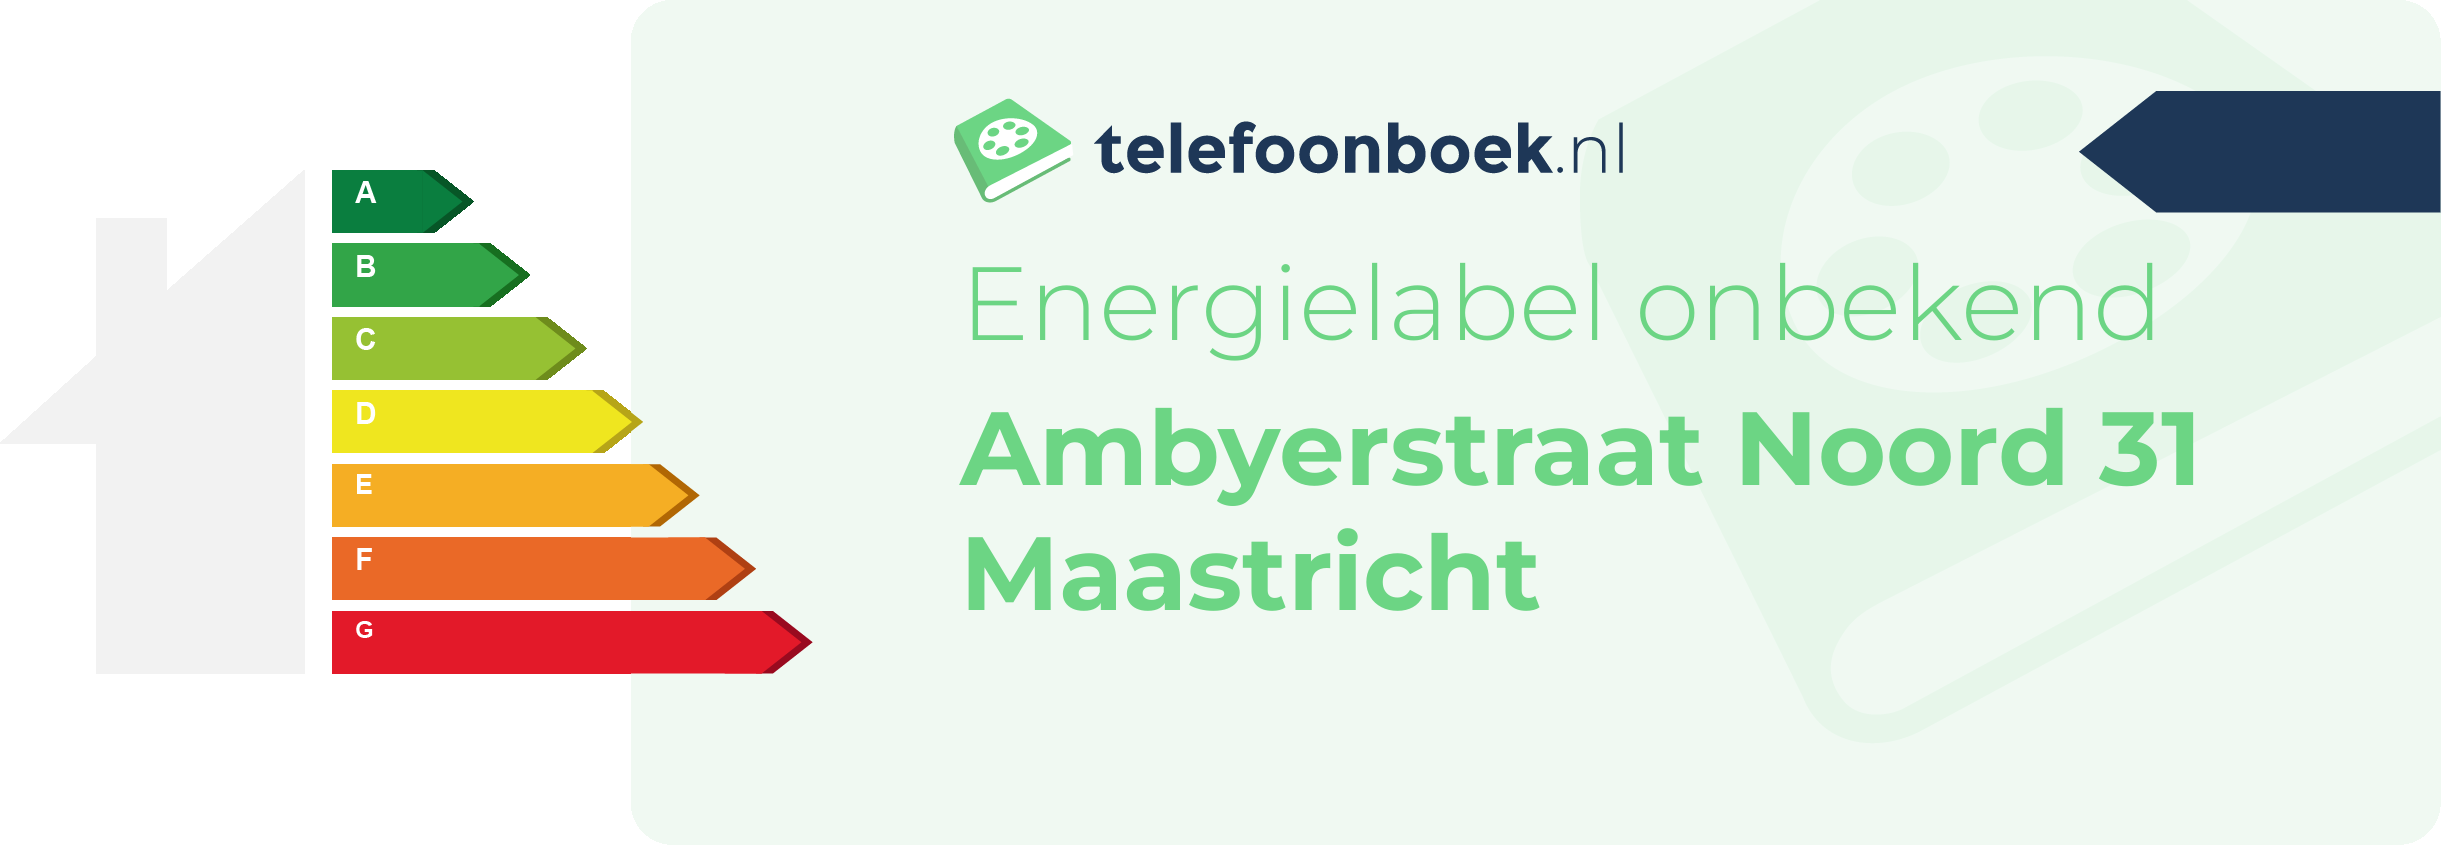 Energielabel Ambyerstraat Noord 31 Maastricht